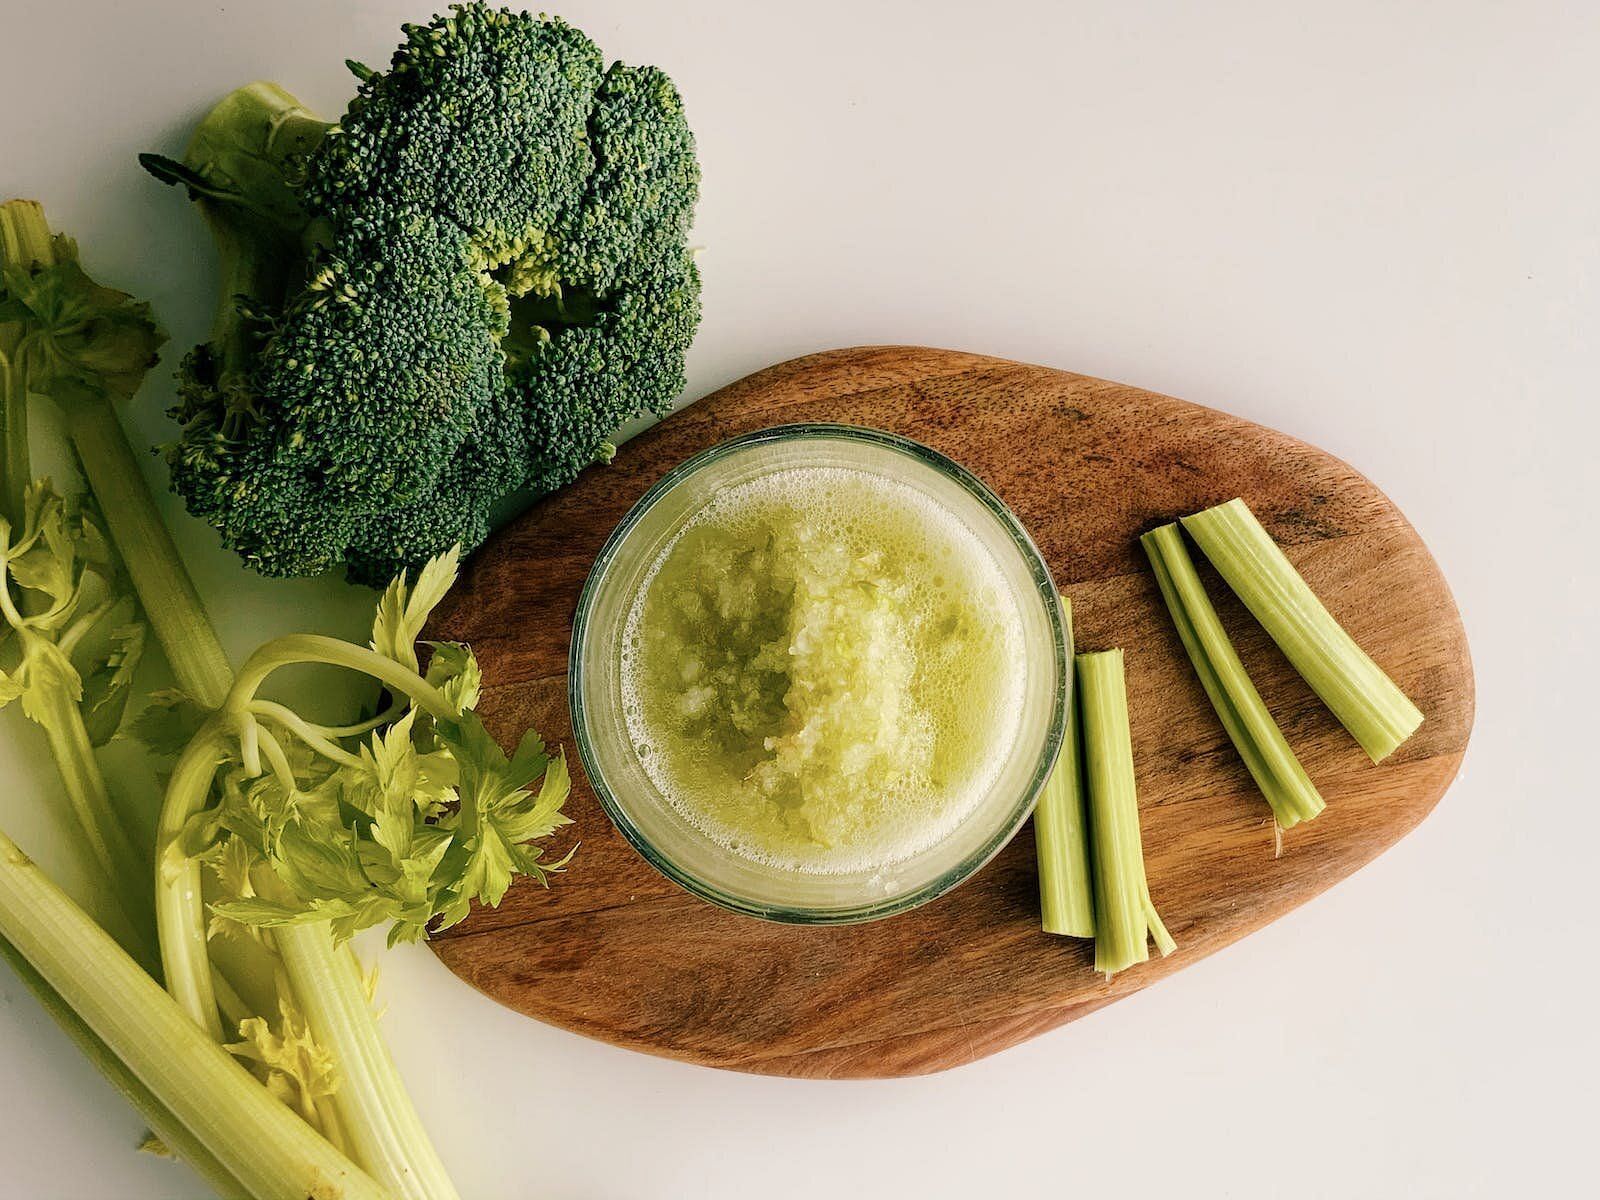 Broccoli and kale soup (Image source: Pexels)